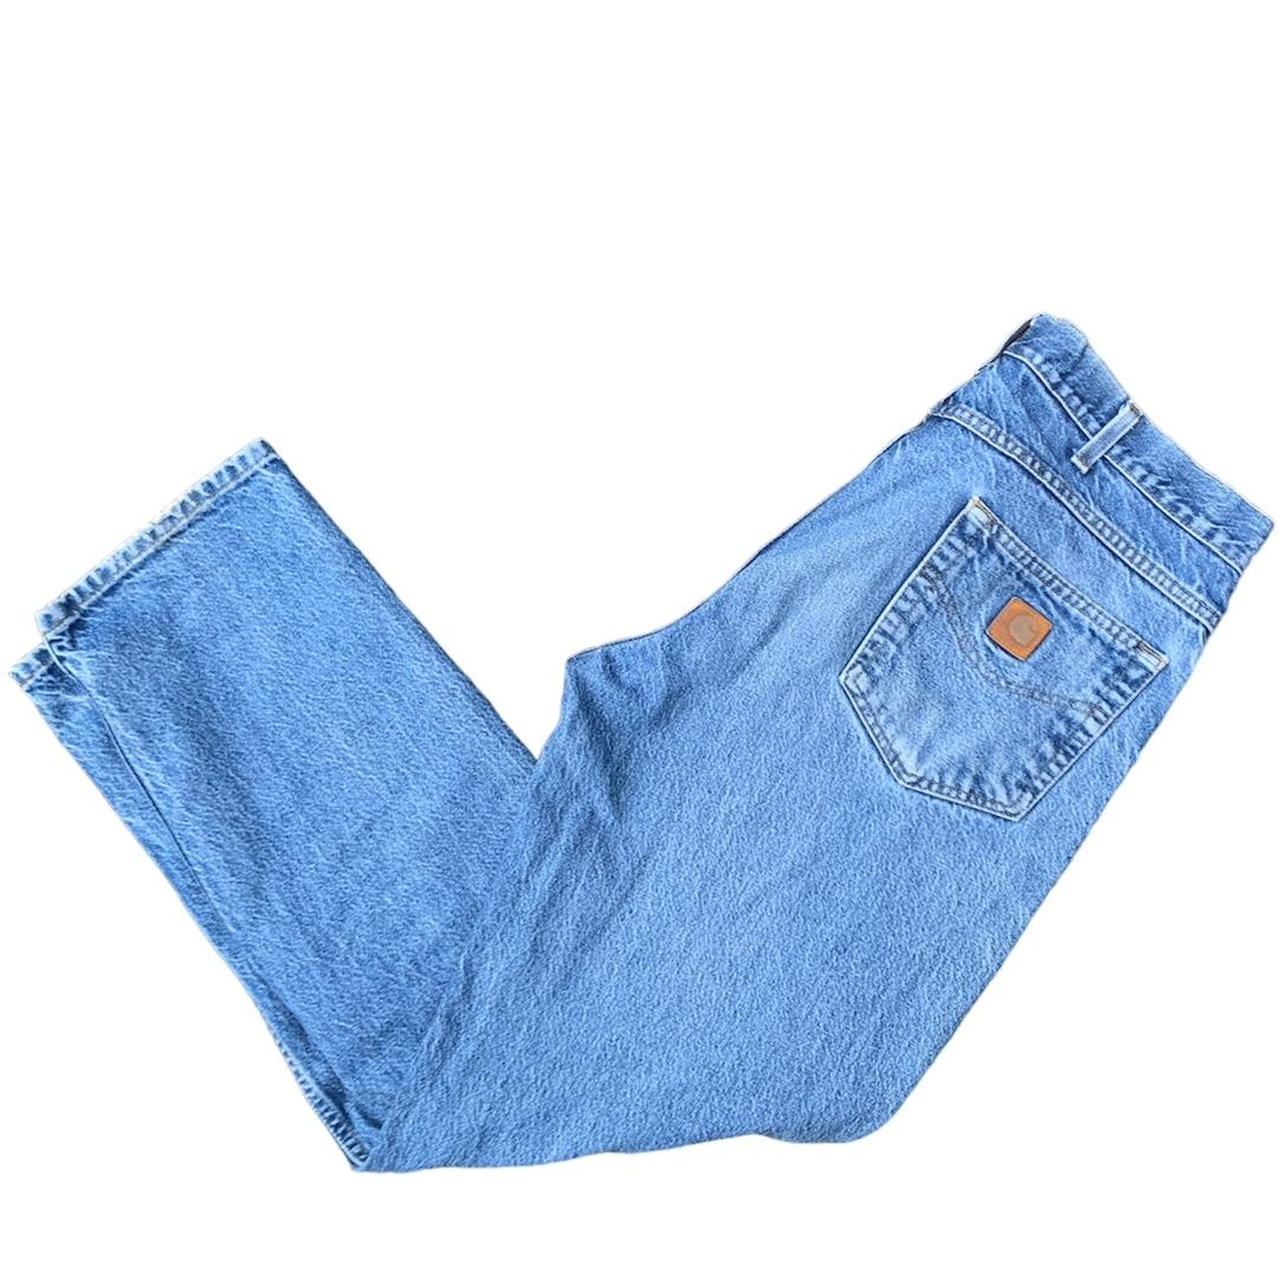 Vintage Carhartt Carpenter Jeans in Light Blue Denim